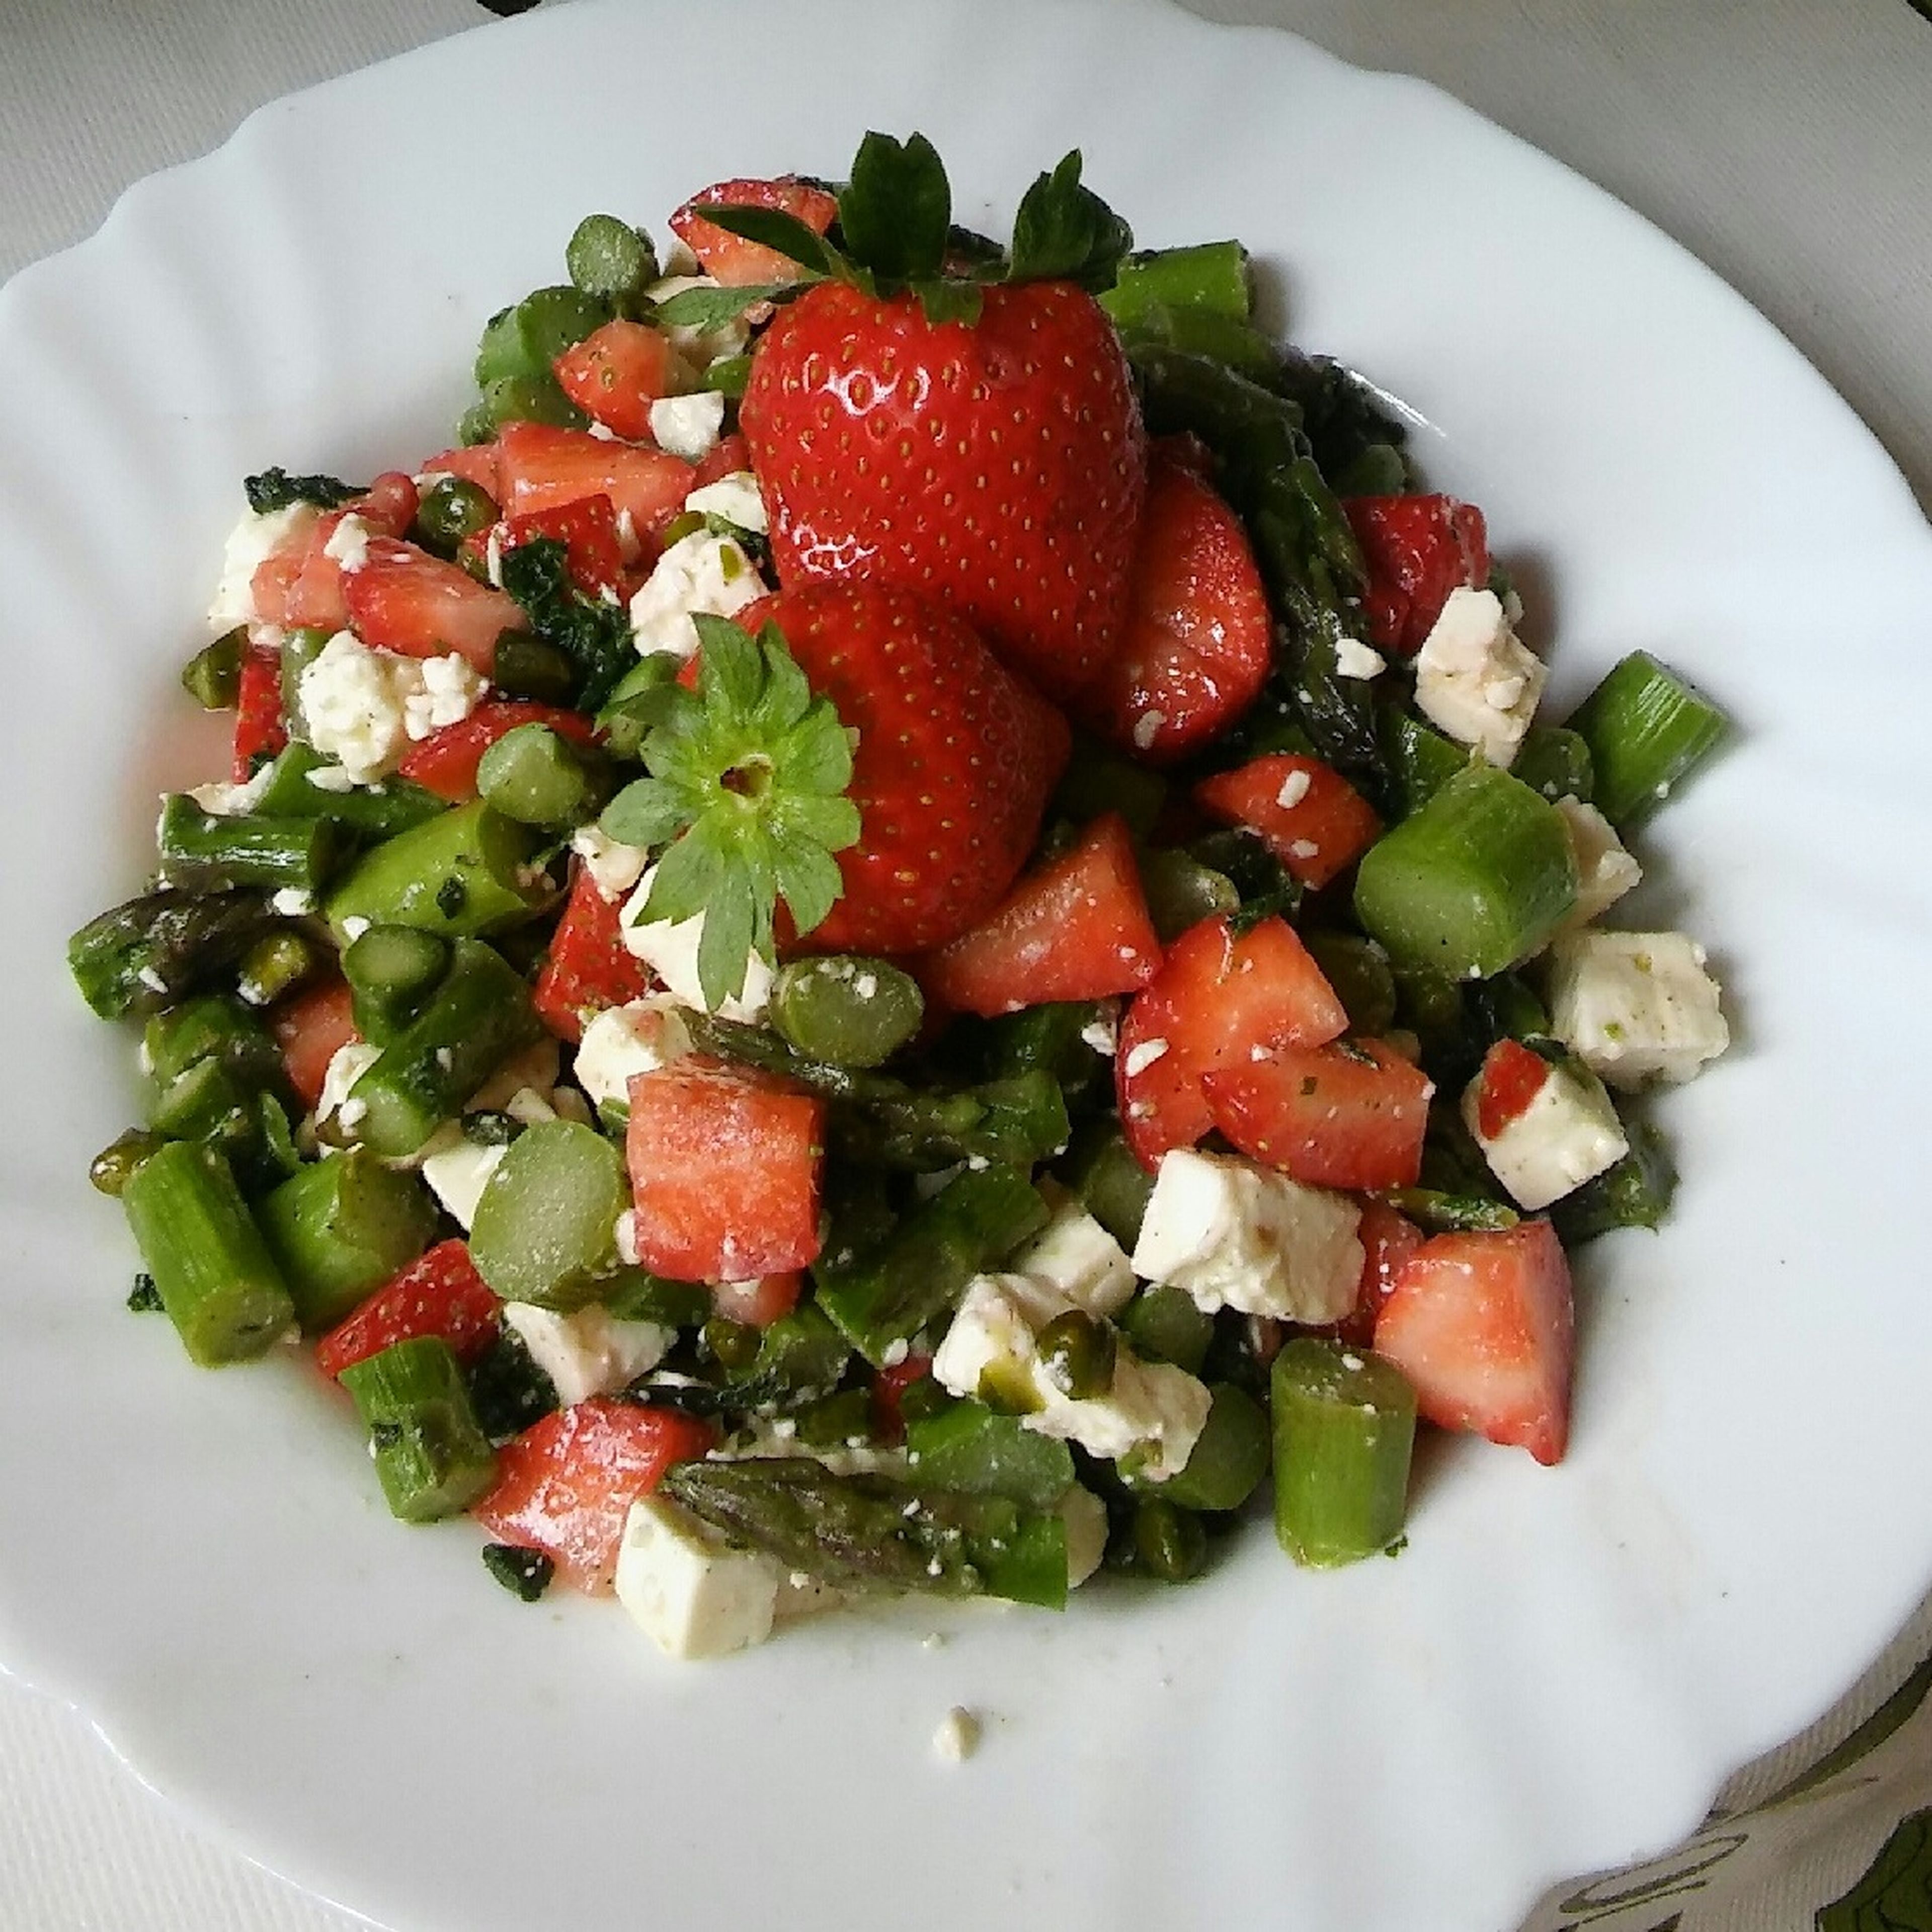 Strawberry and asparagus salad